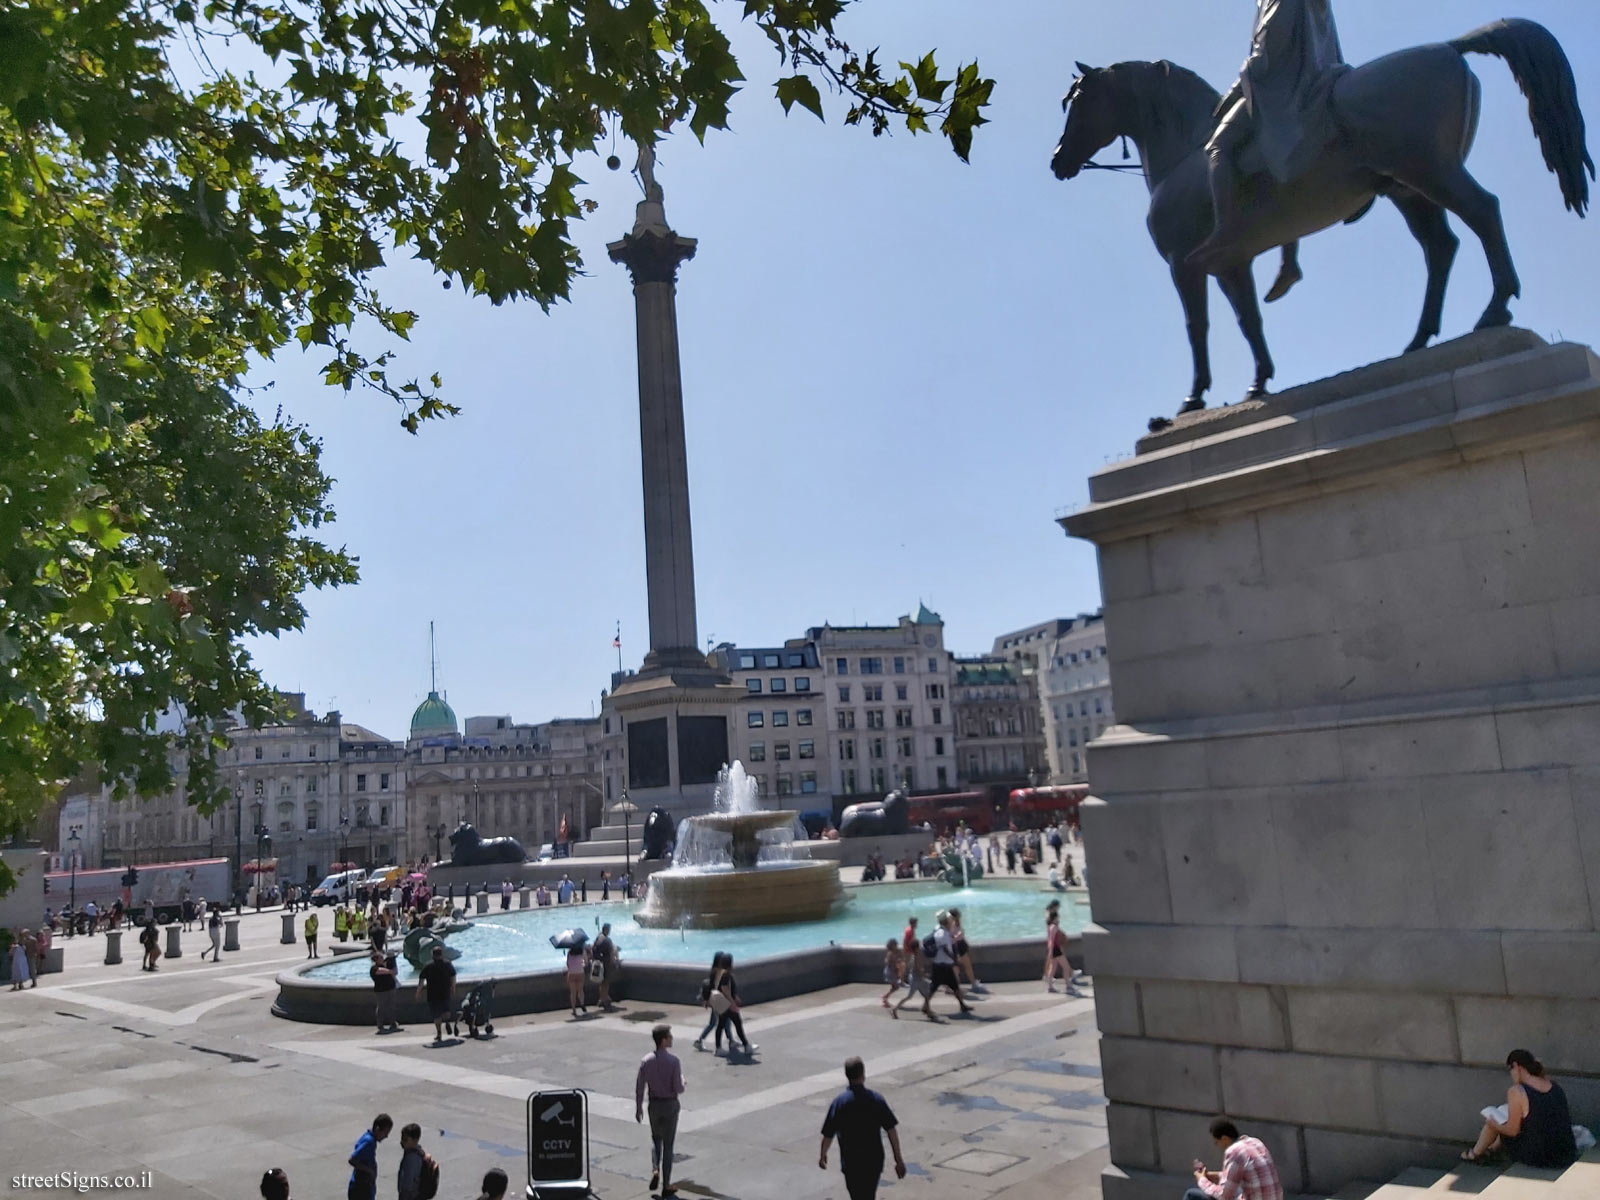 London - Trafalgar Square - The Fountain and Nelson’s Column